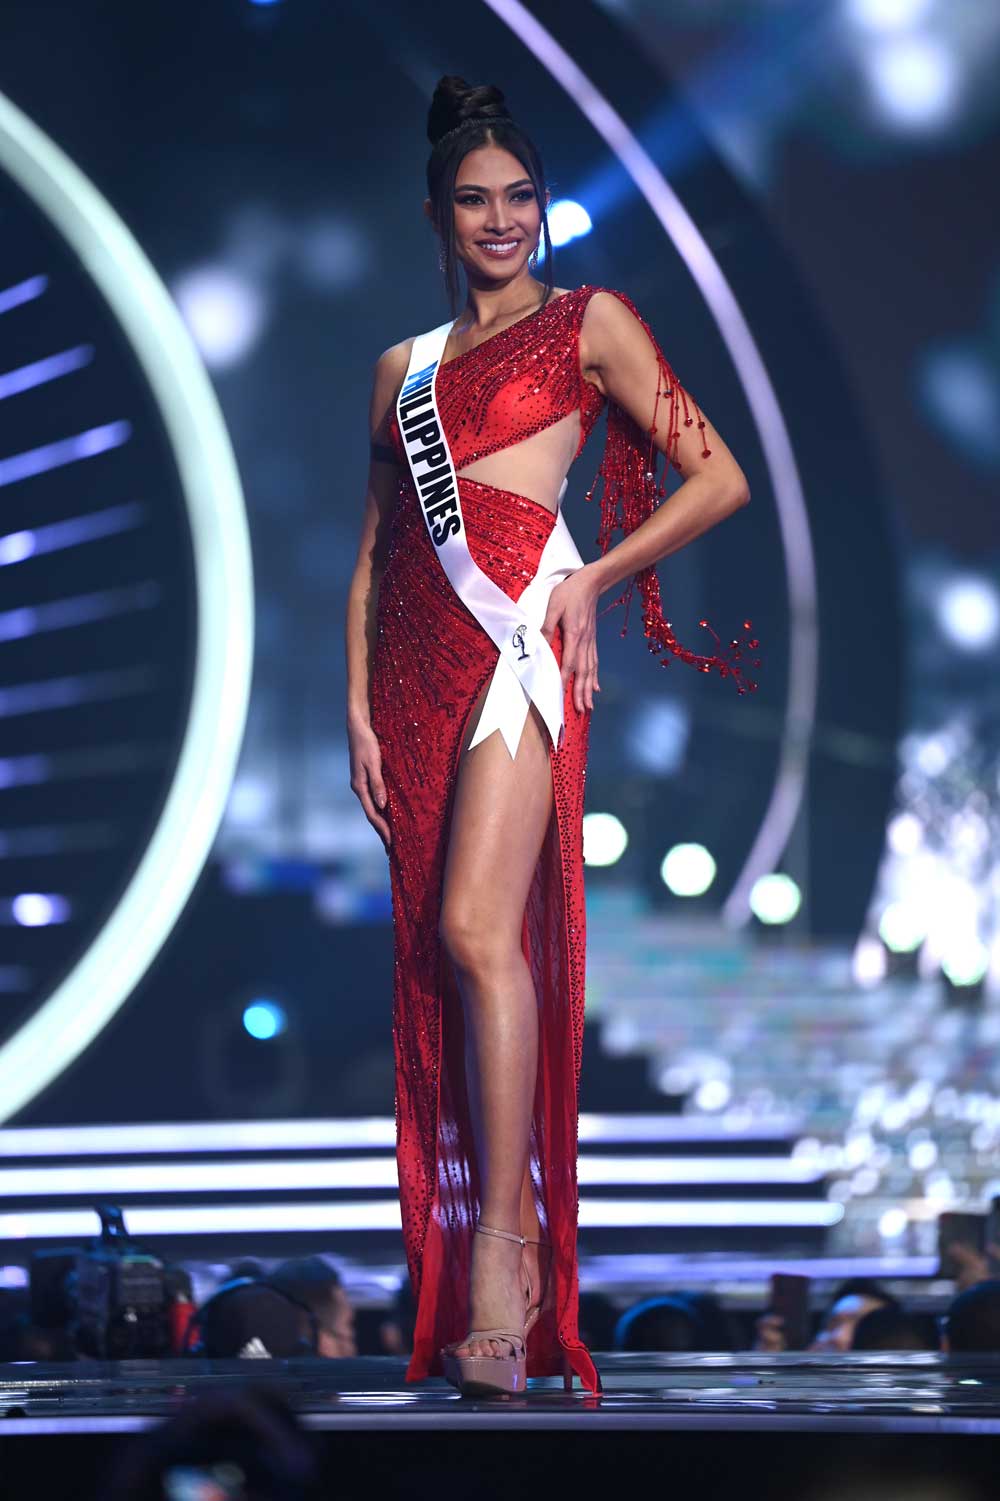 Beatrice Luigi Gomez, Miss Universe 2021 gown by Francis Libiran